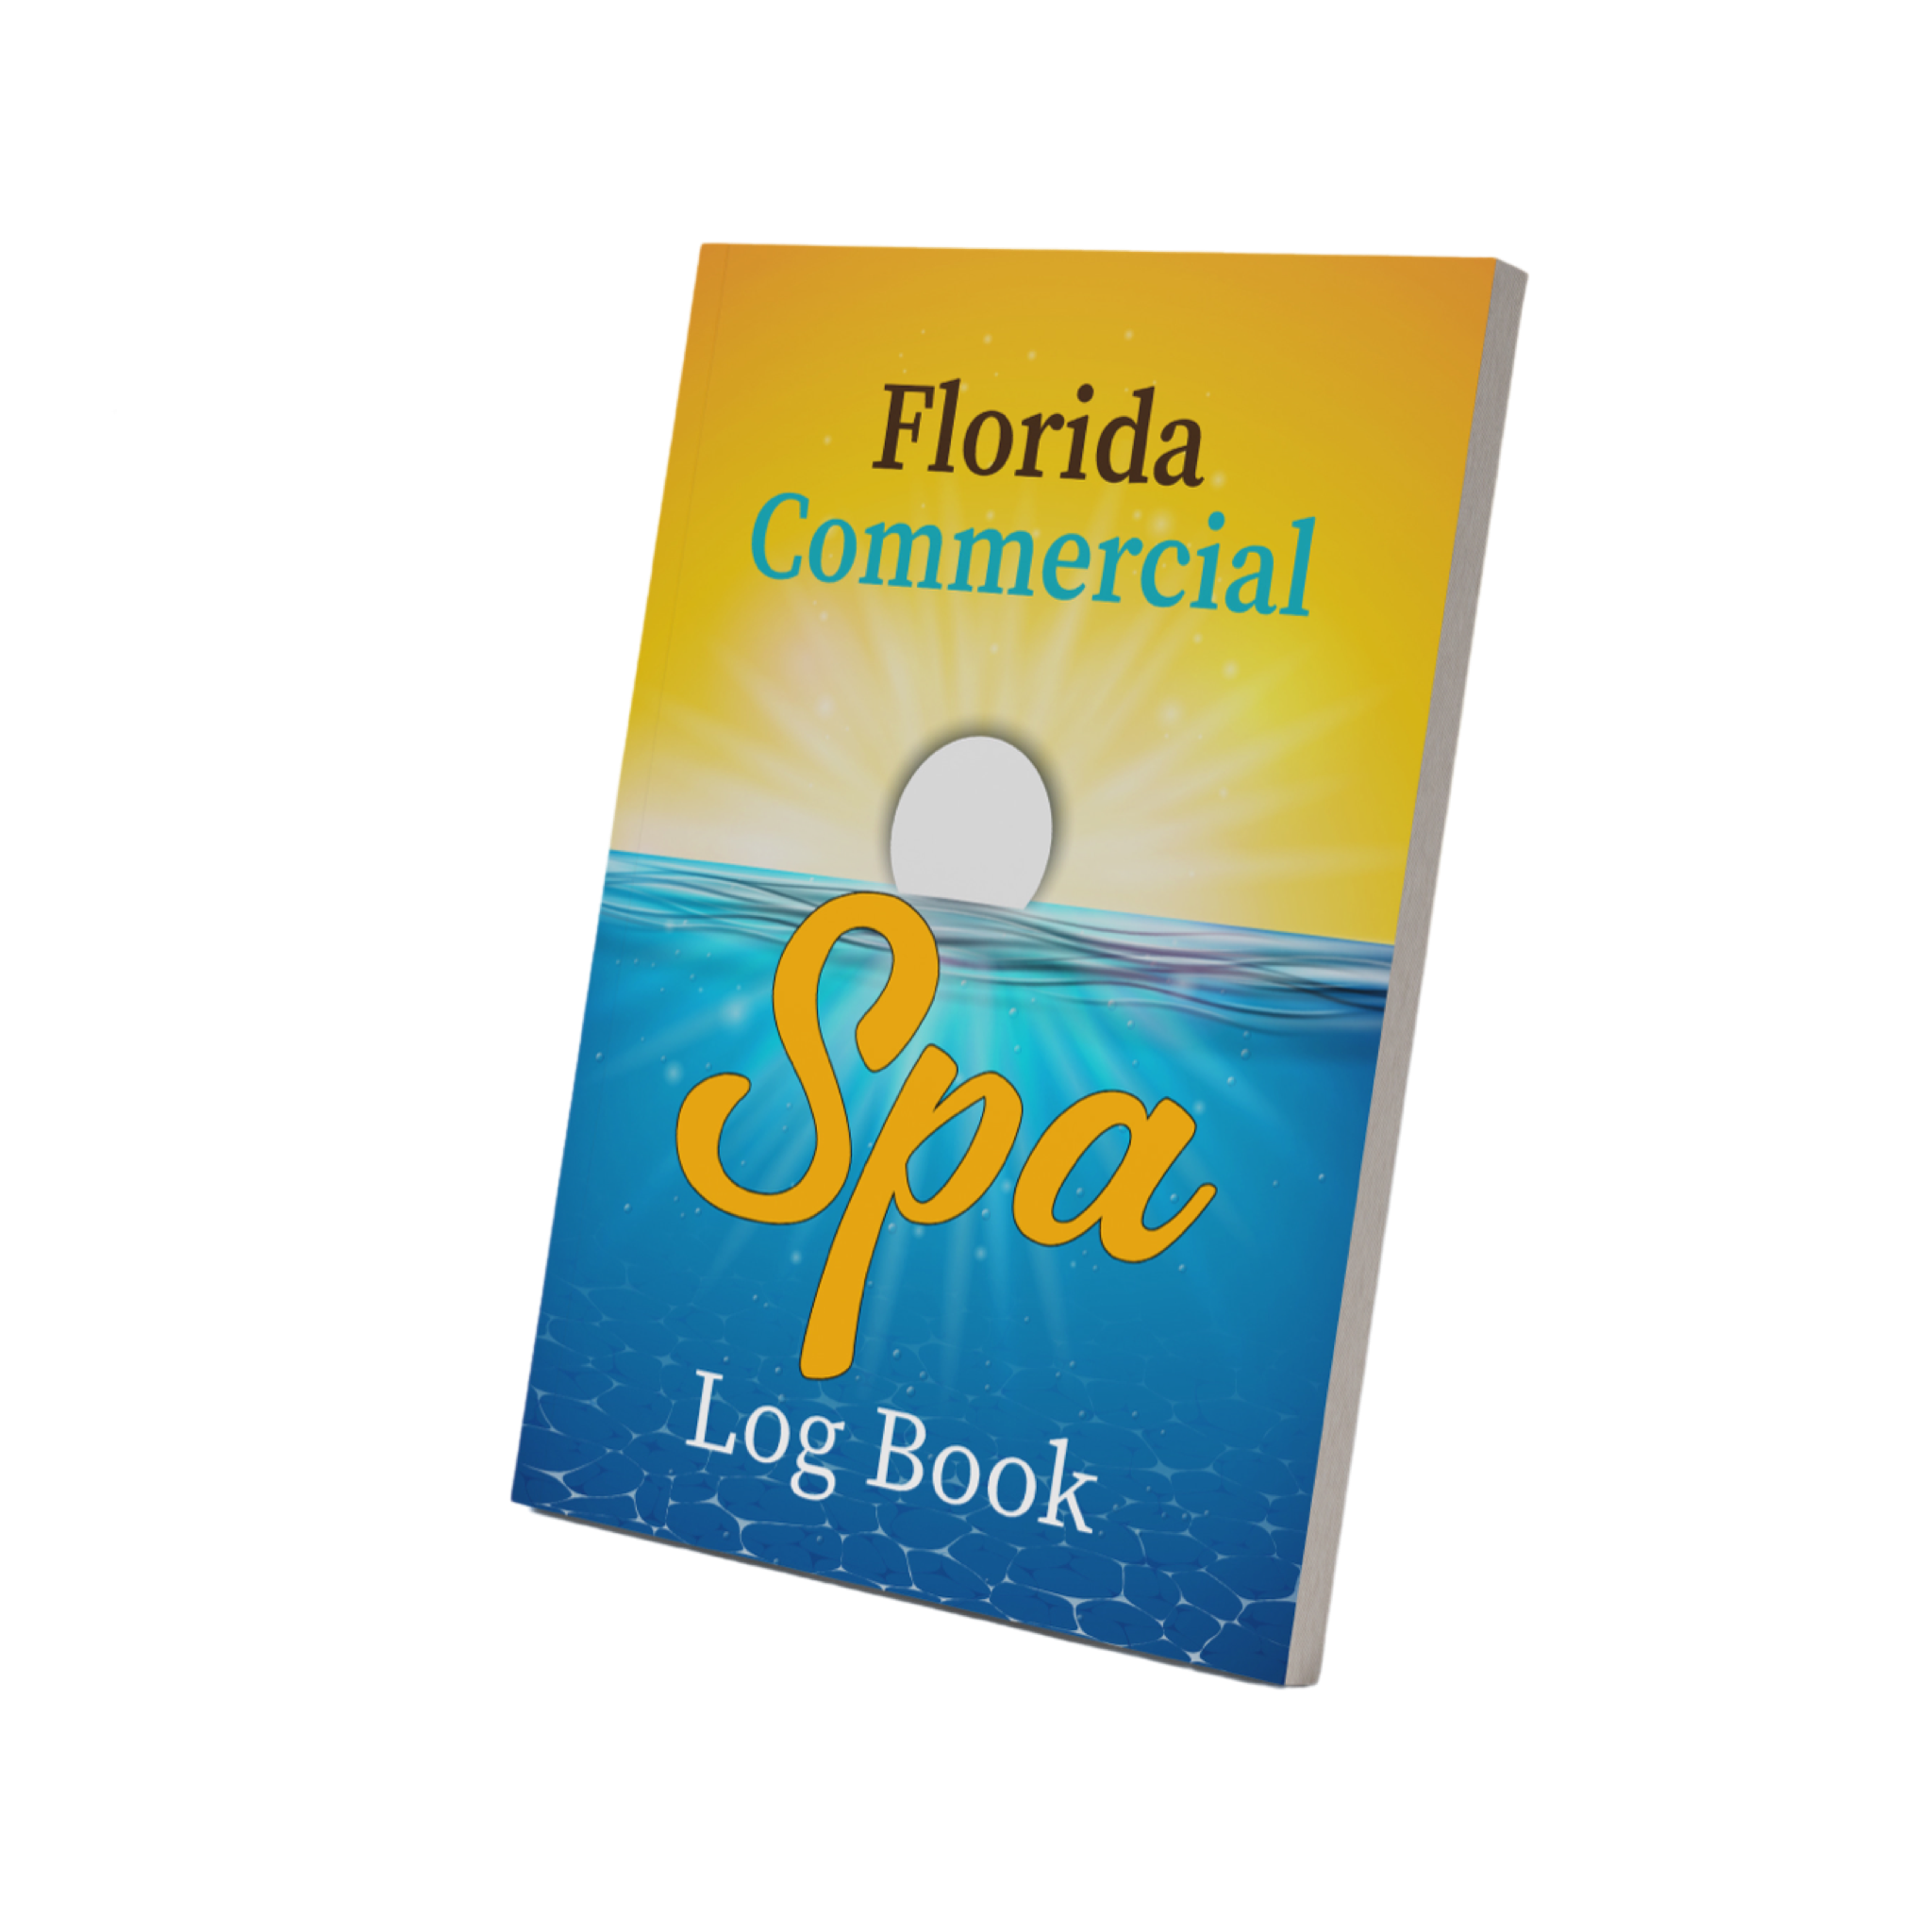 Florida Commercial Spa Log Book - Paperback